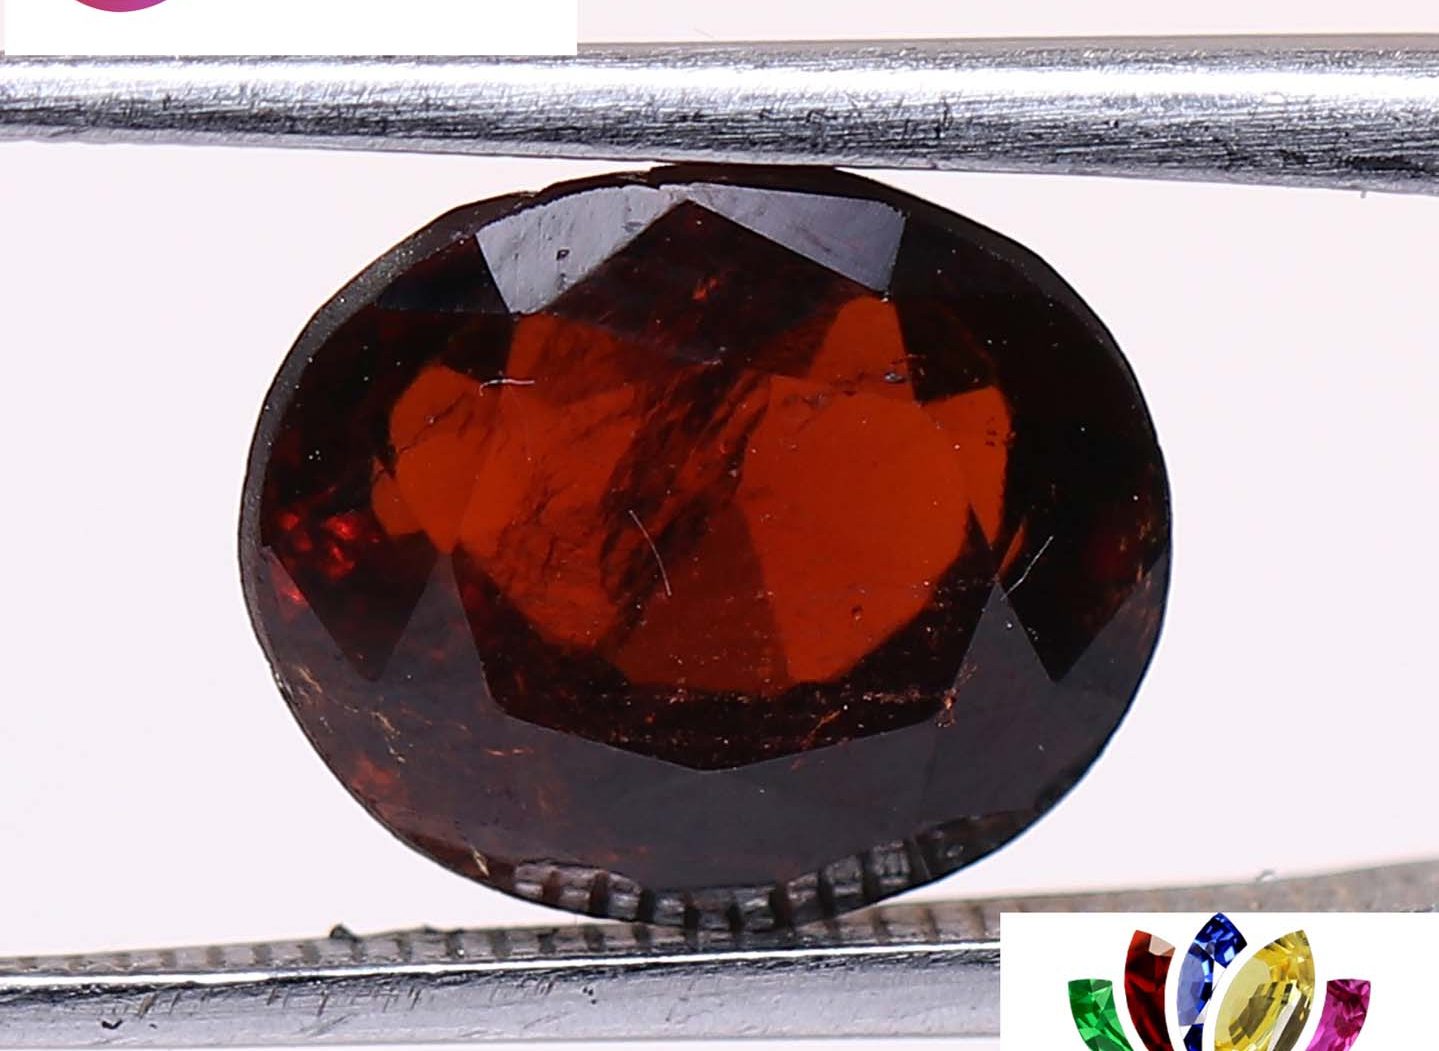 Hessonite (Gomed) 3.36 Ct.